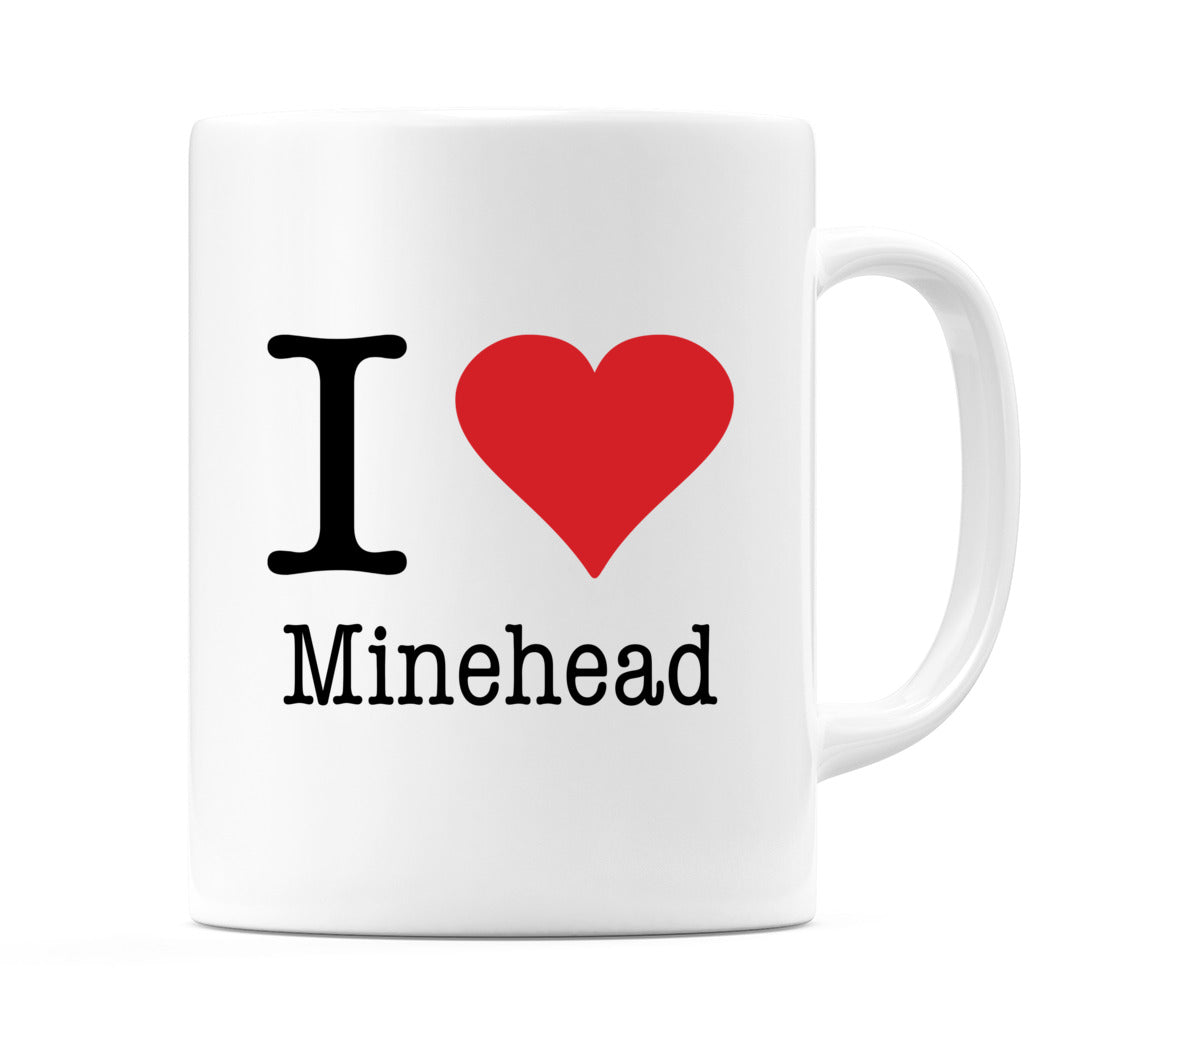 I Love Minehead Mug